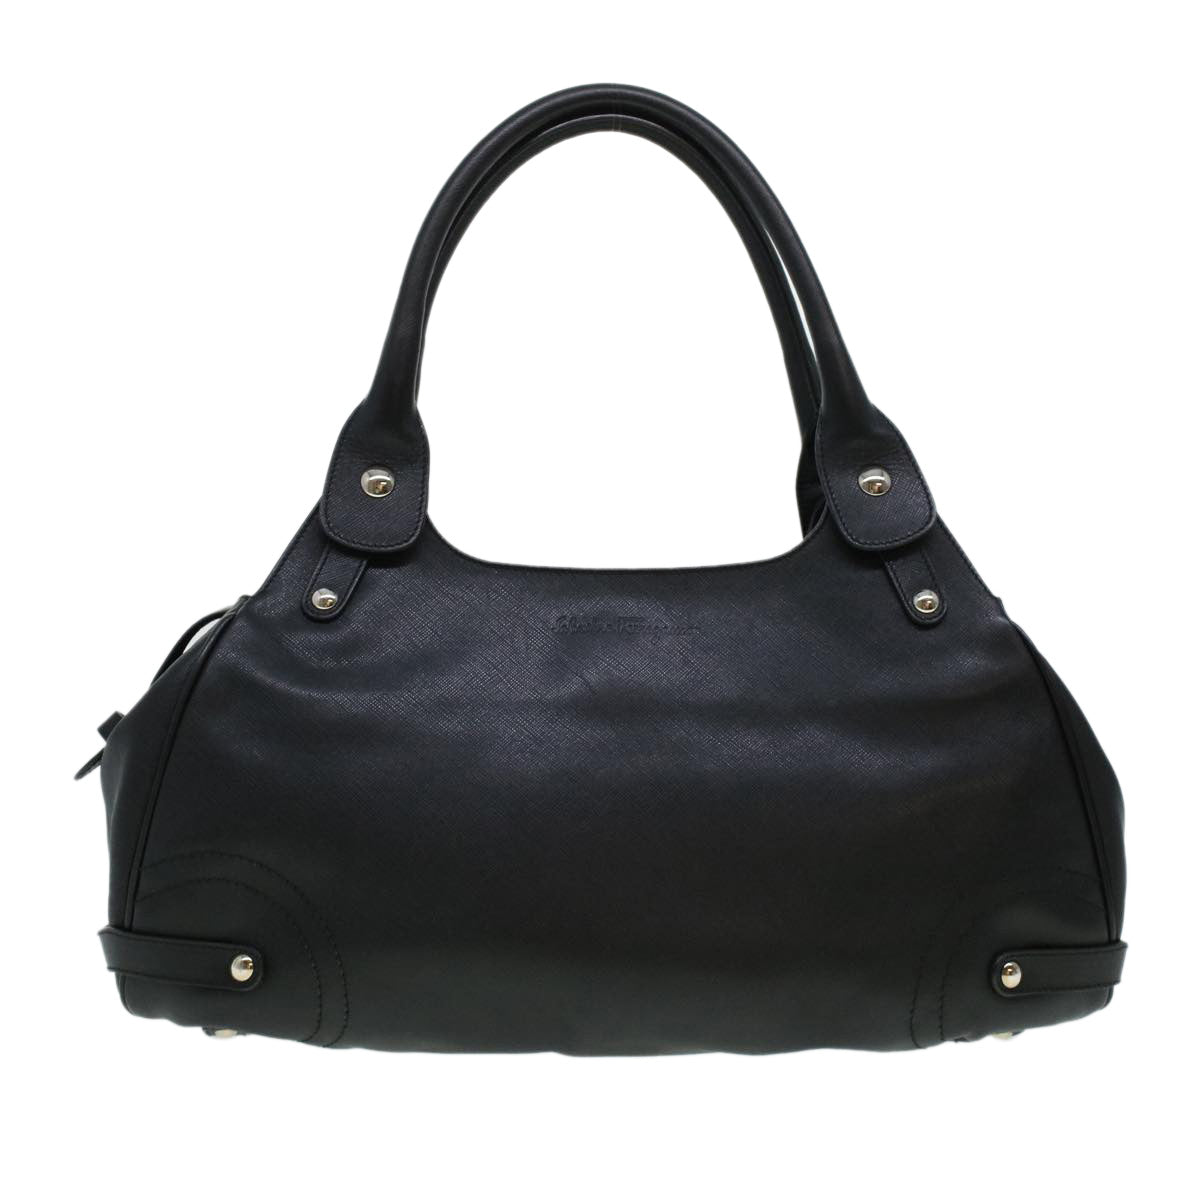 Salvatore Ferragamo Shoulder Bag Safiano leather Black DY-21 6305 Auth cl518 - 0